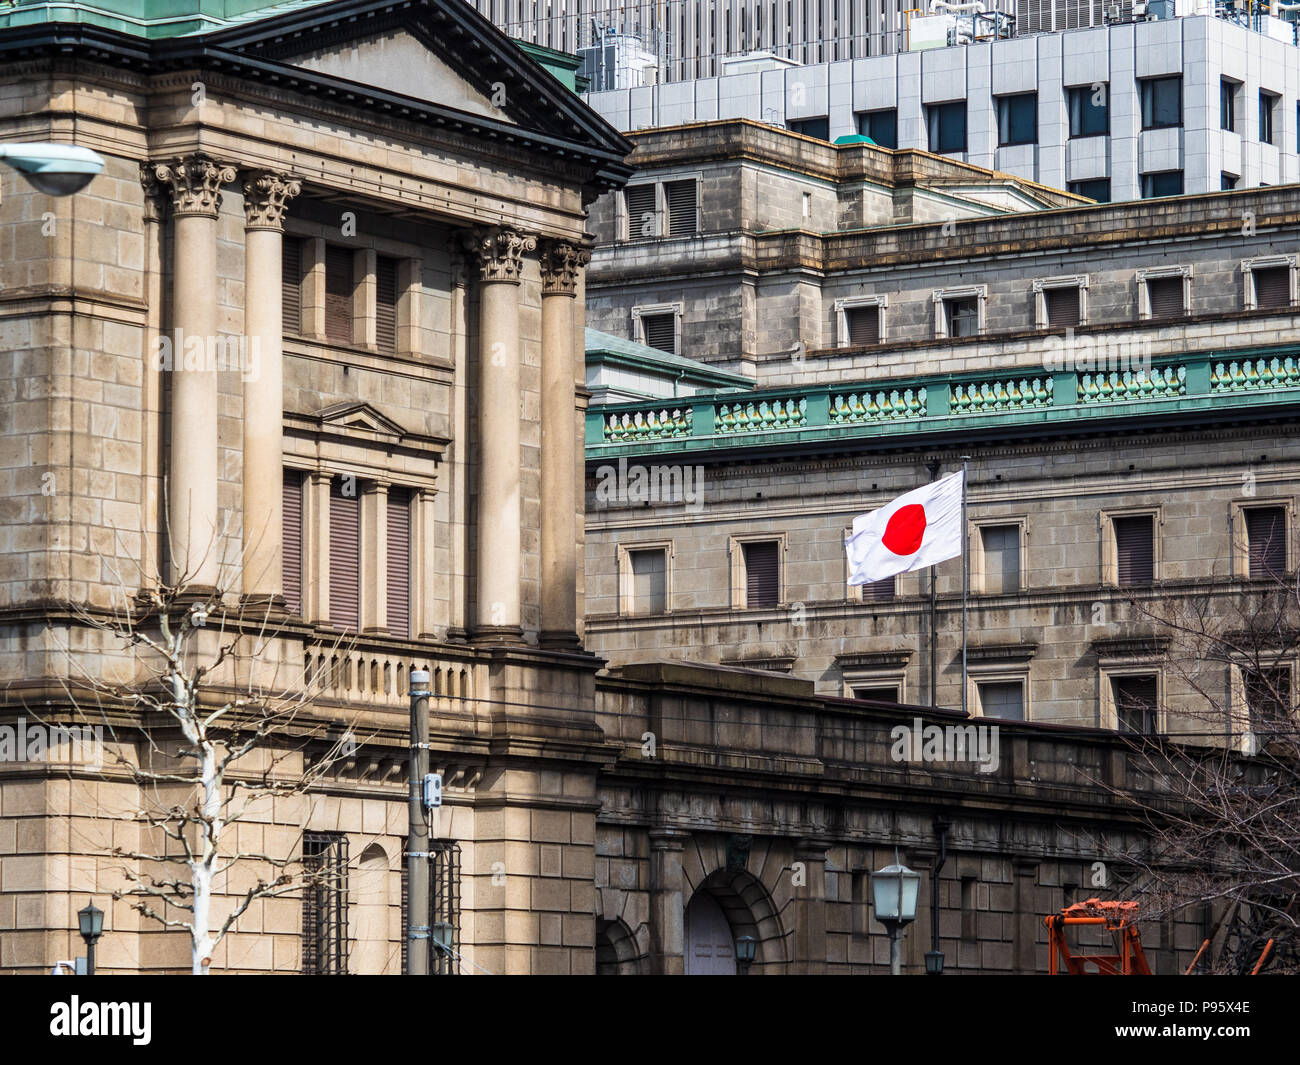 Bank of Japan, BoJ, the Japanese Central Bank also called Nichigin, in Tokyo Japan. established 1882. Stock Photo